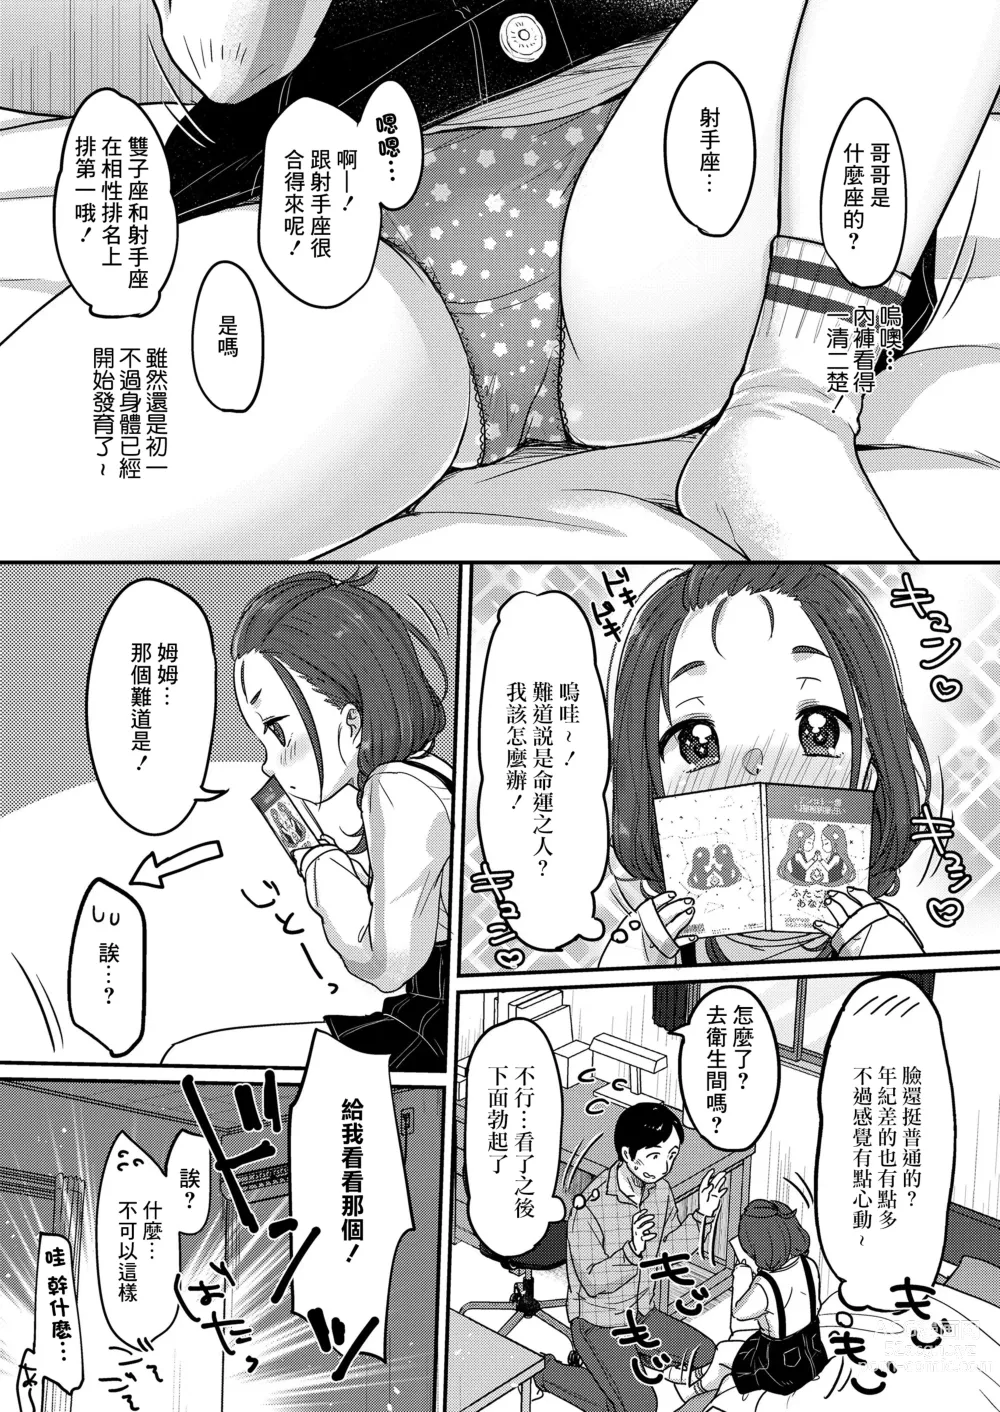 Page 3 of manga Kyou no Lucky Item